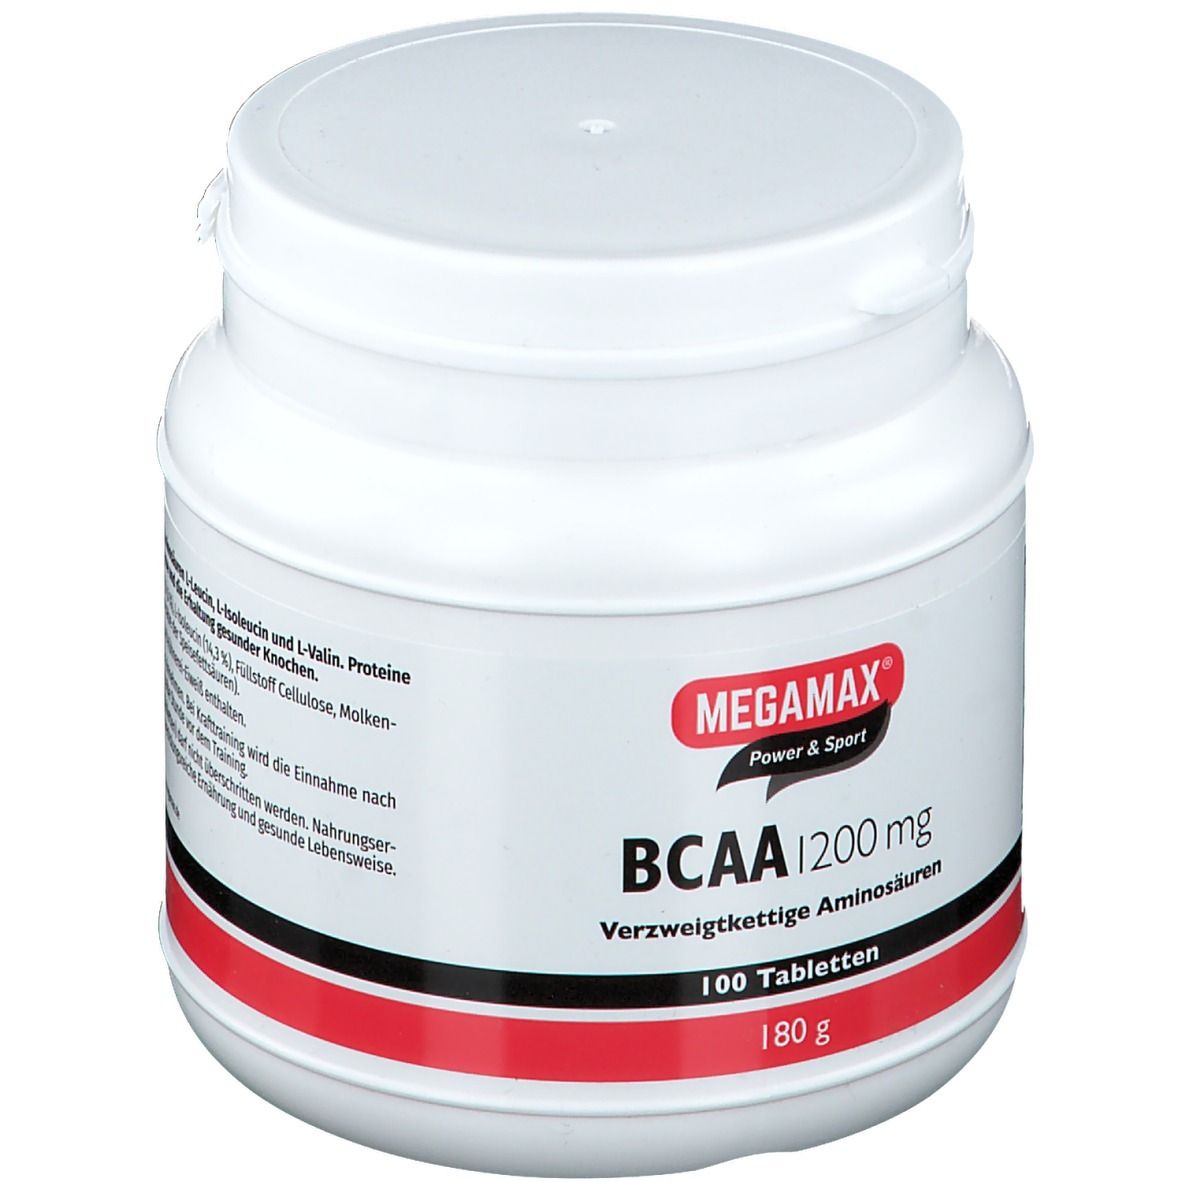 MEGAMAX® Power & Sport BCAA 1200 mg